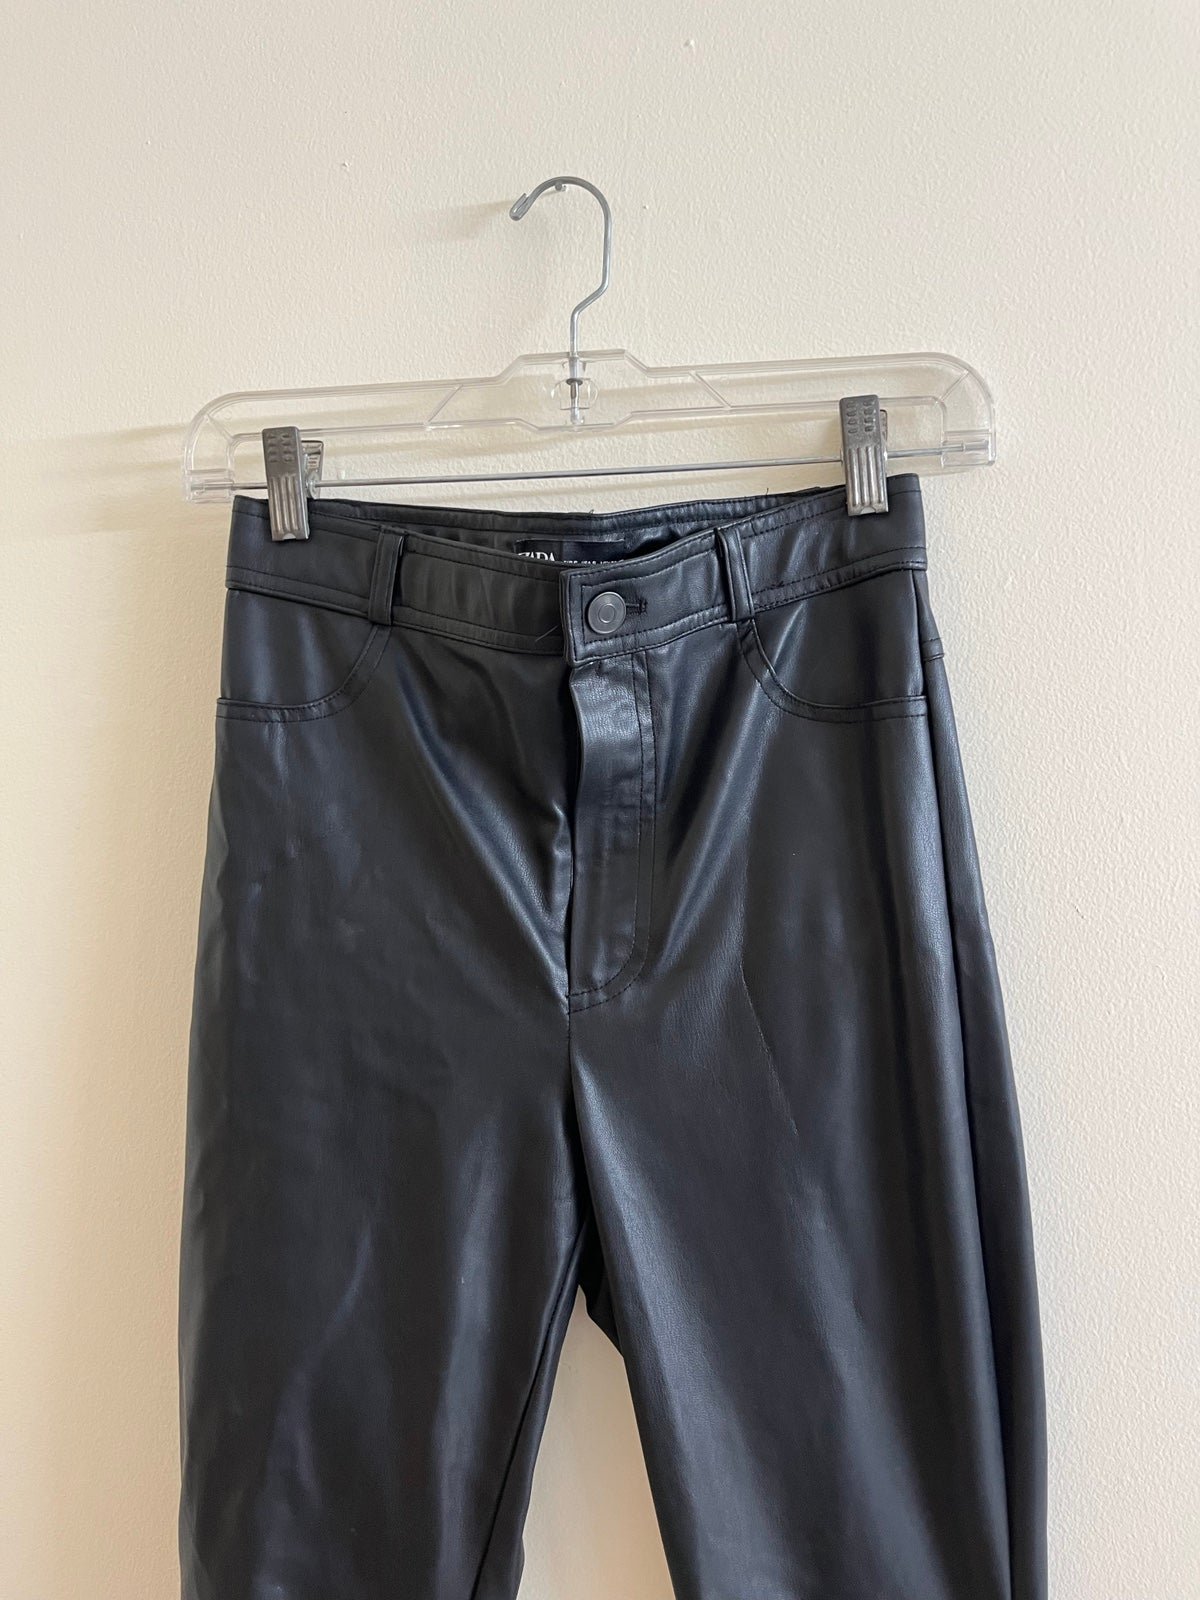 Buy Zara leather pants PEV1FPTff Factory Price